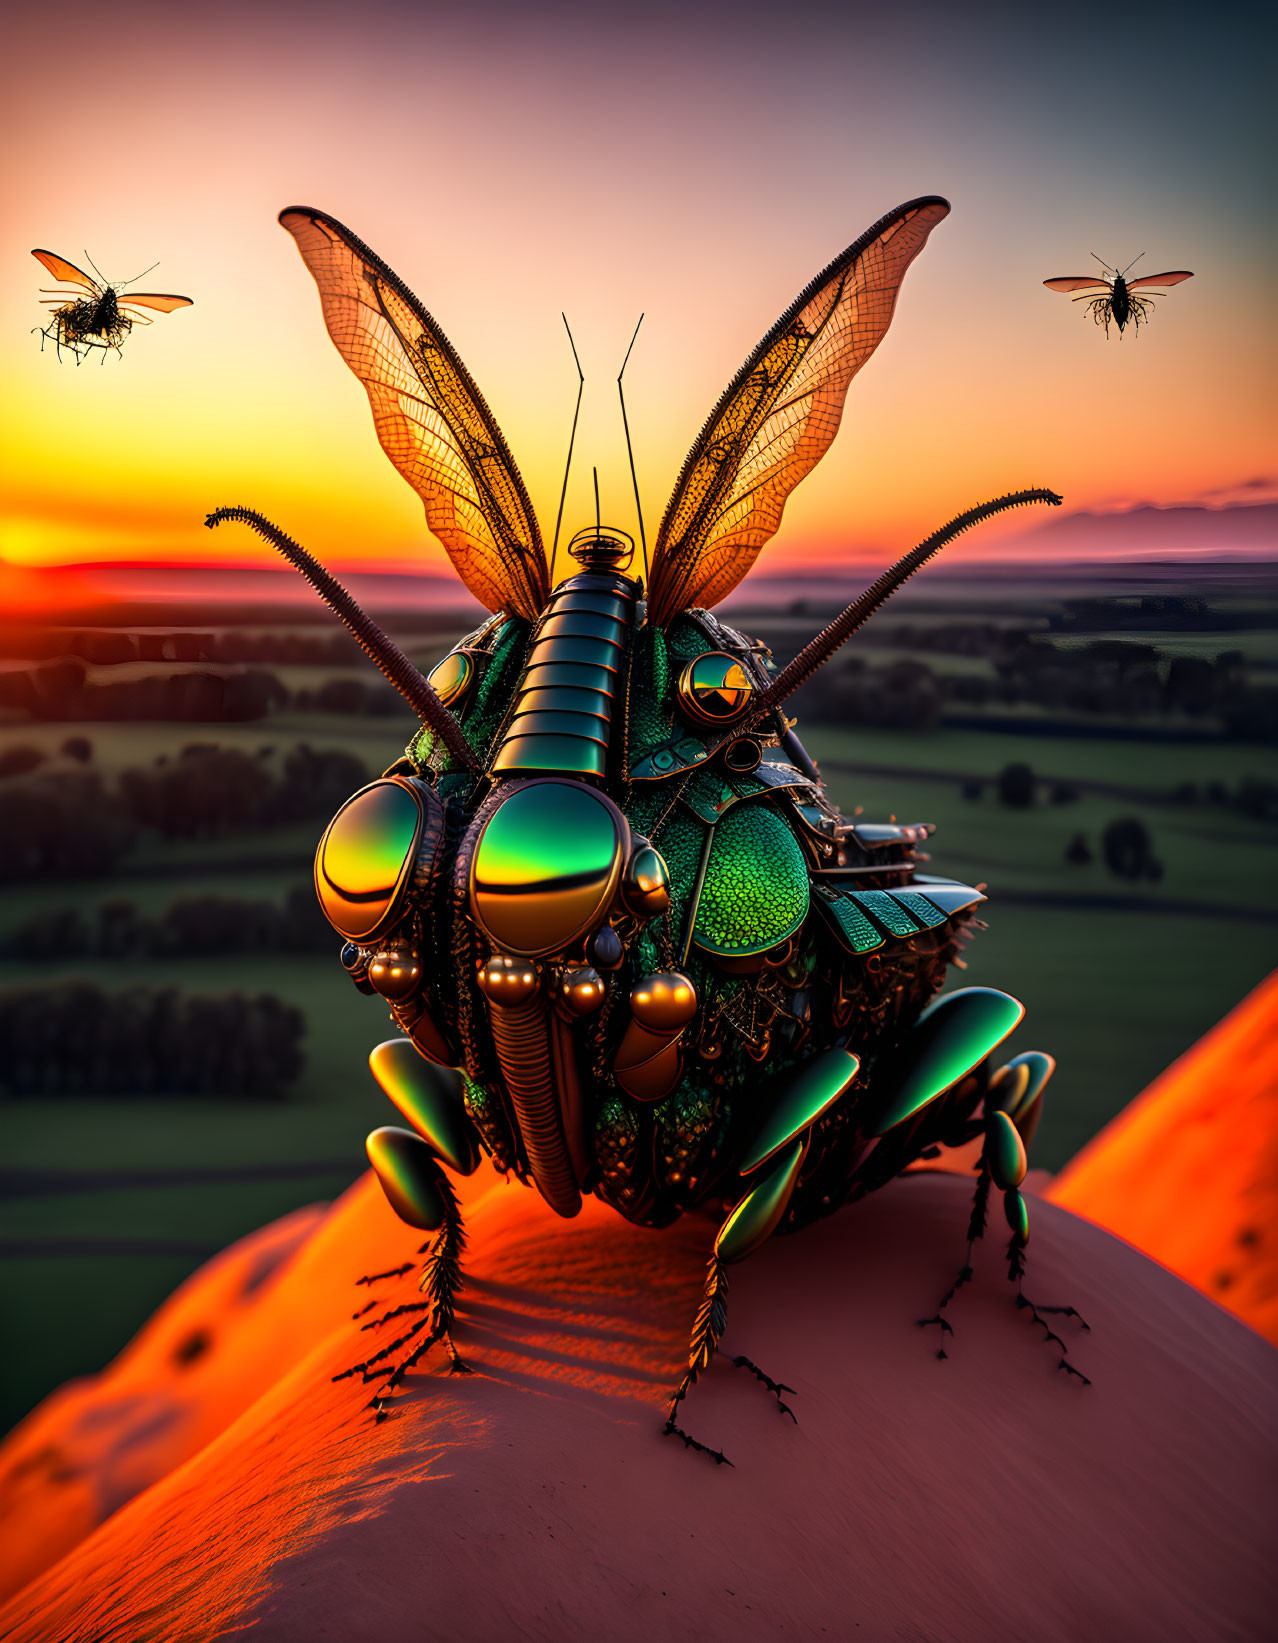 Detailed Digital Art: Mechanical Bee on Vibrant Sunset Landscape